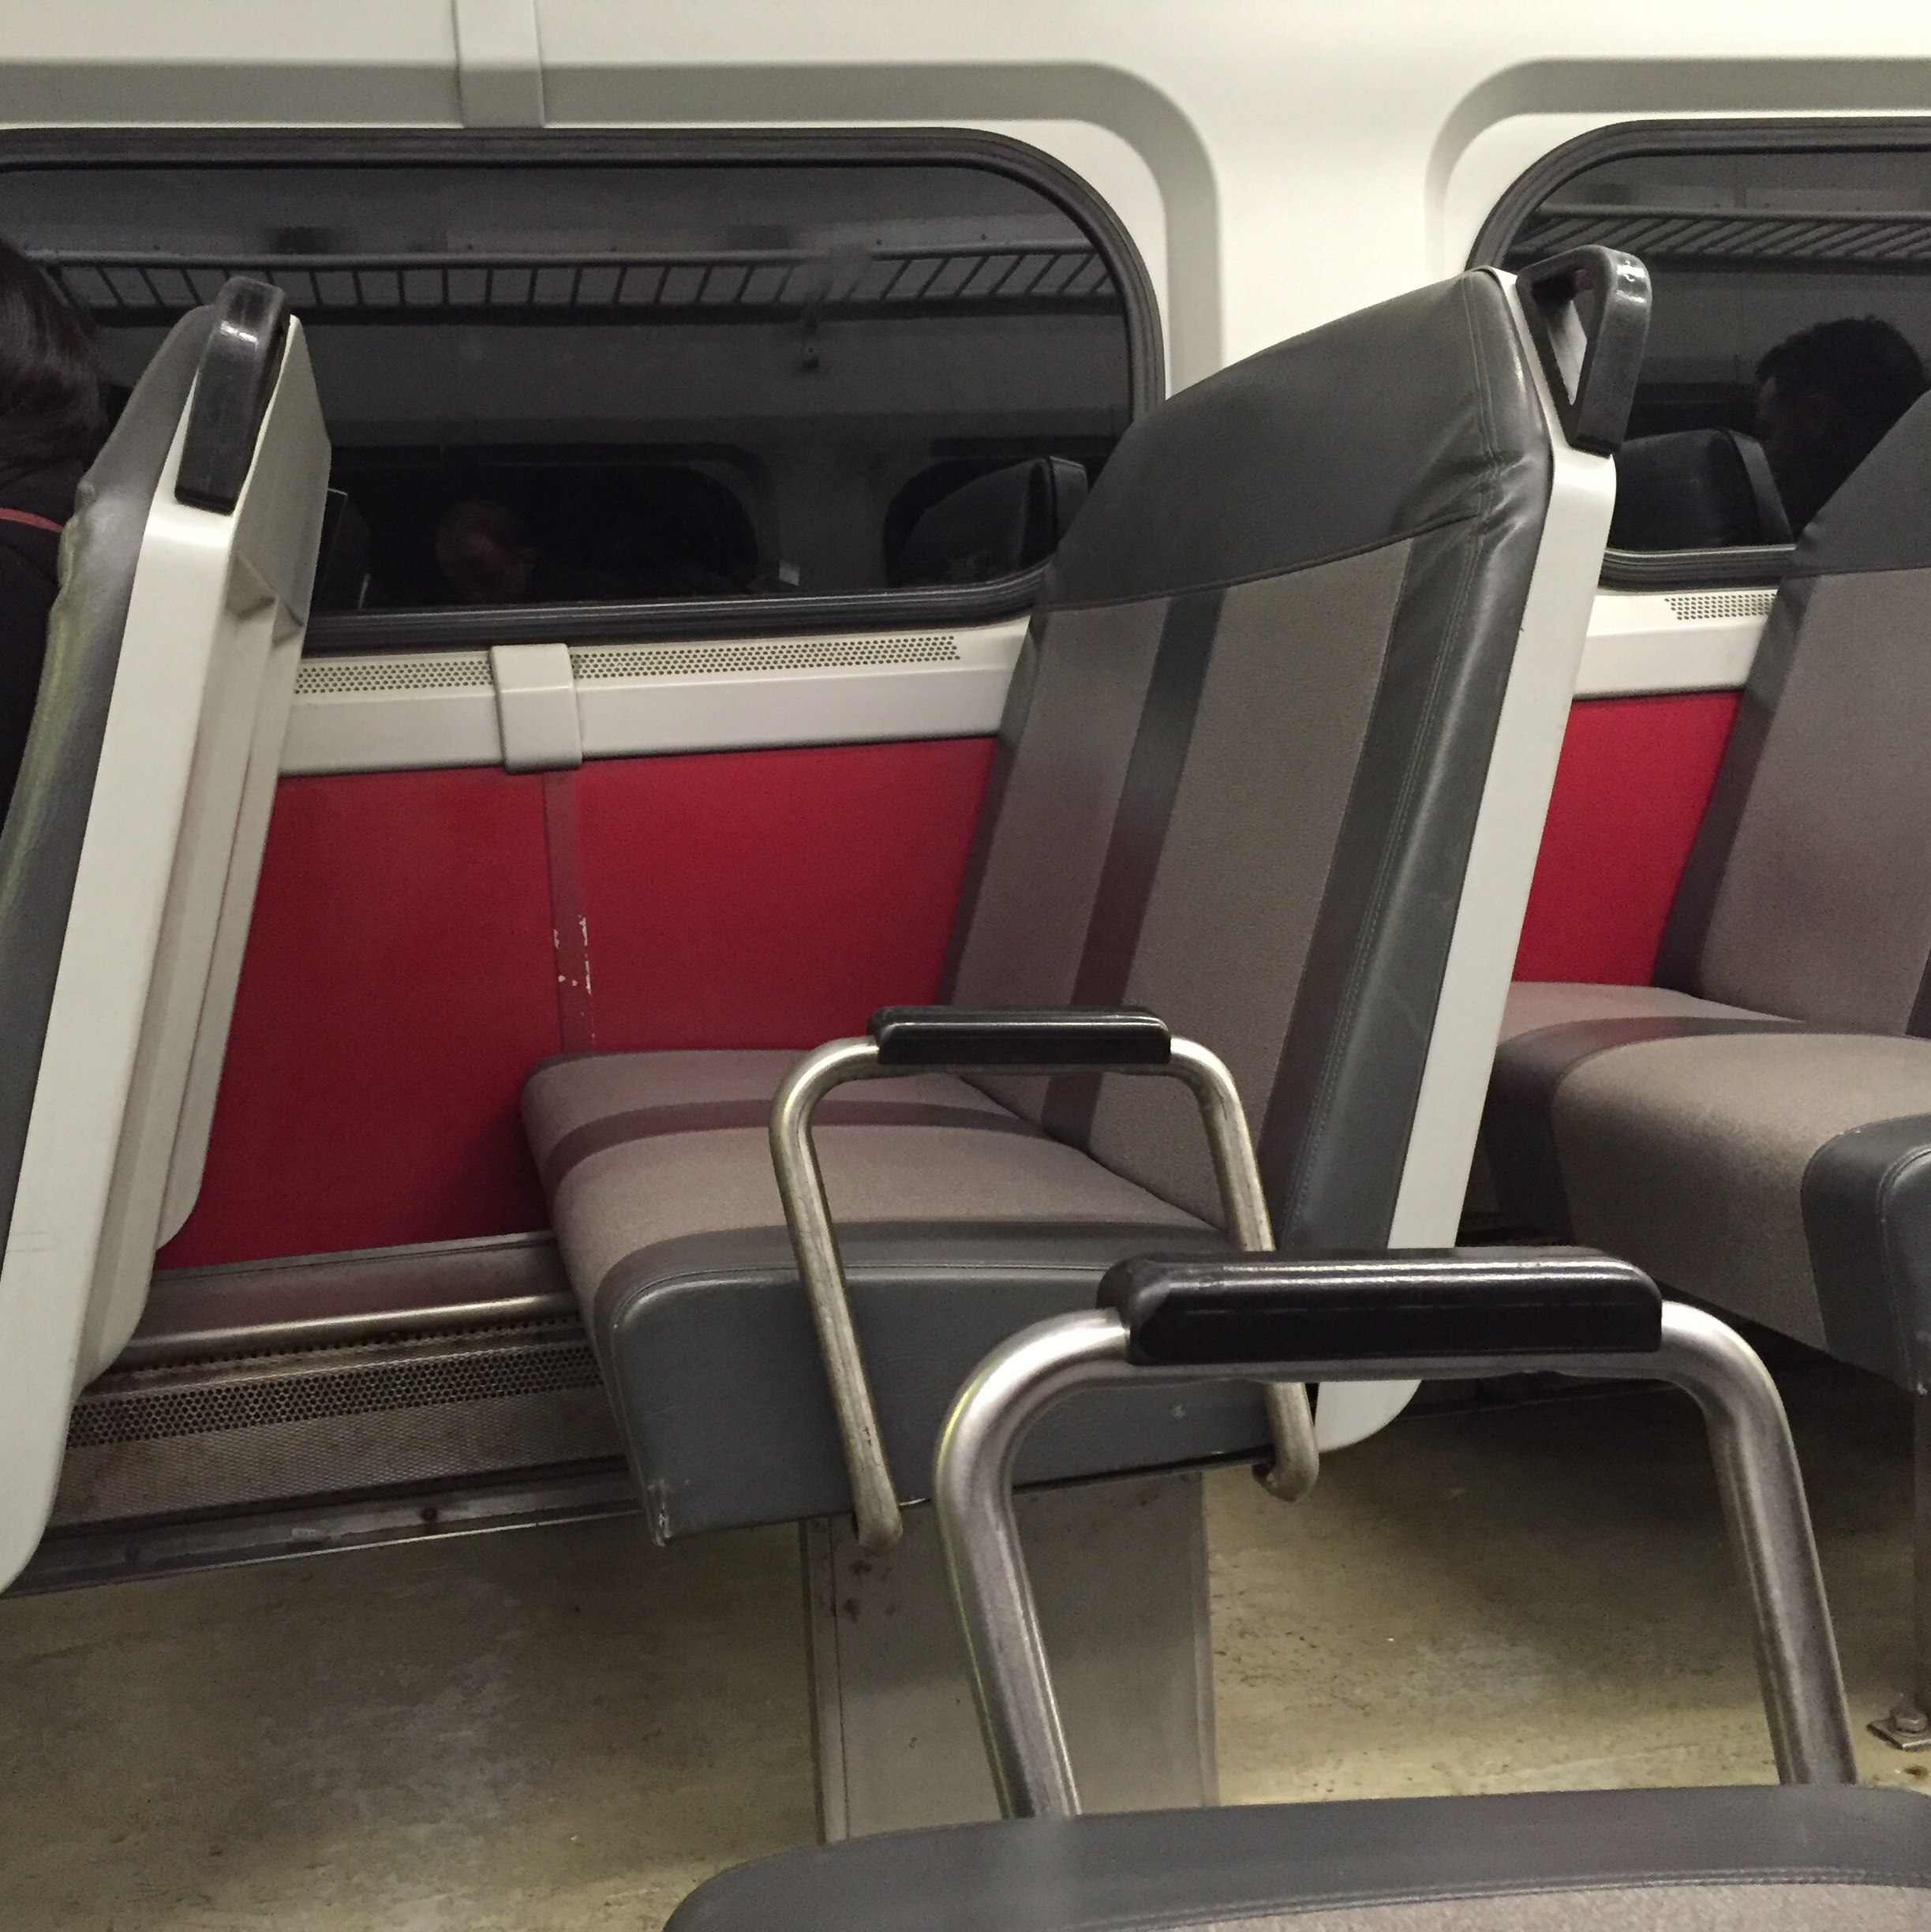 Seats on a train car